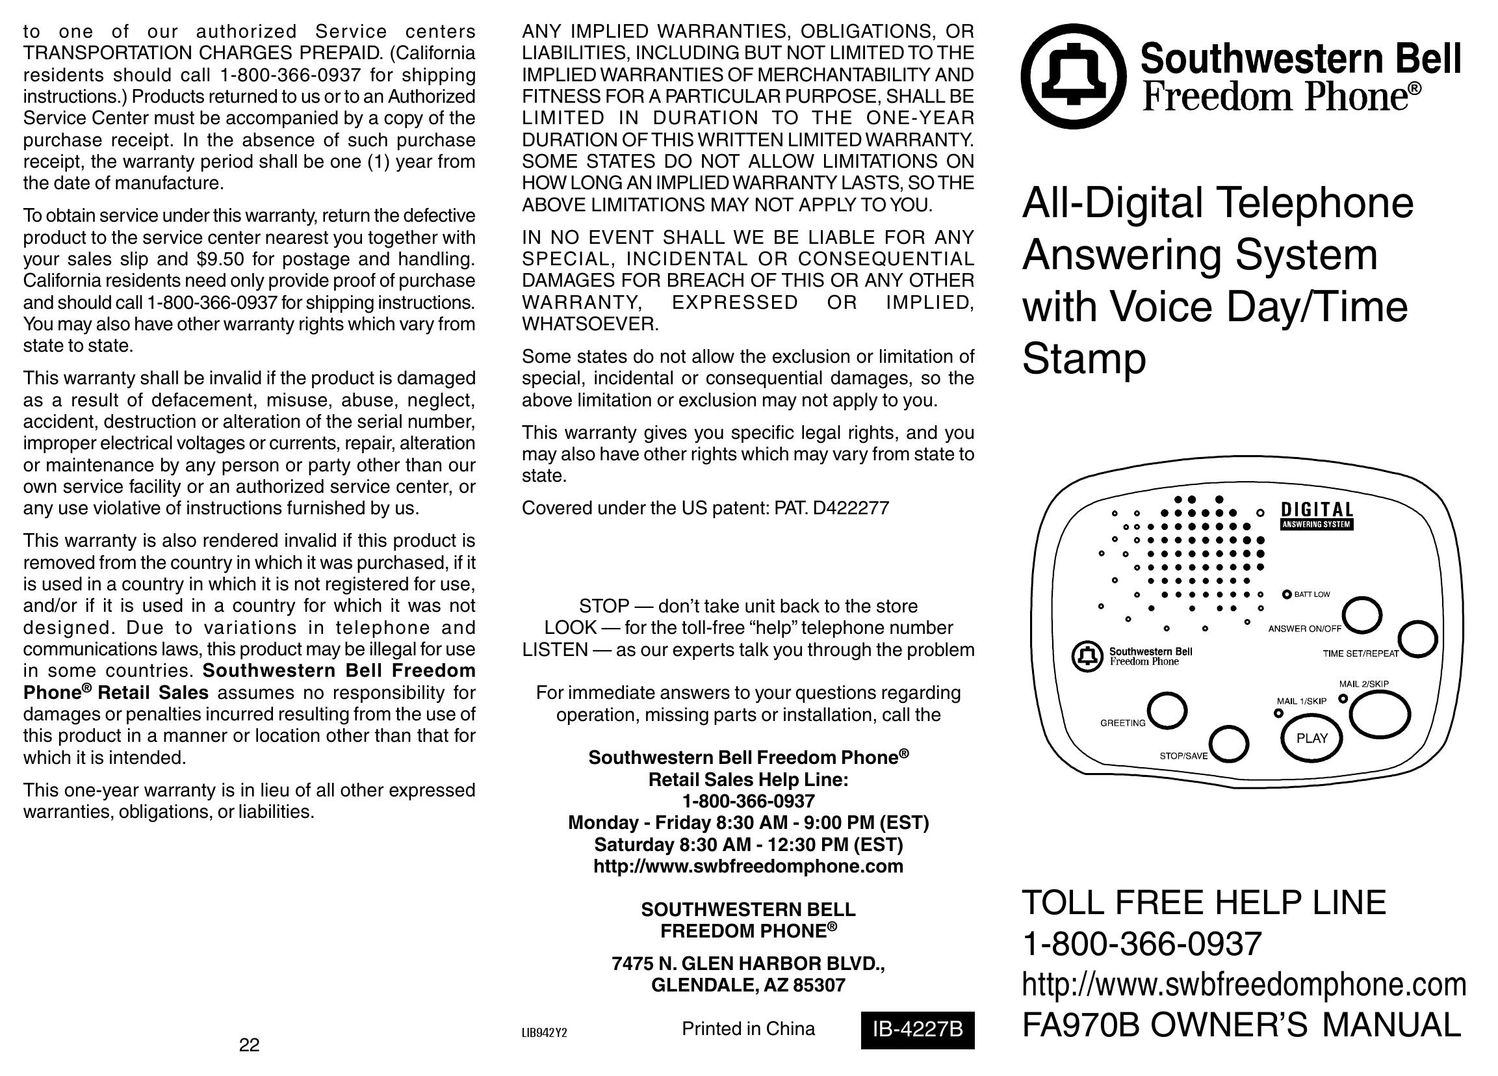 Southwestern Bell FA970B CRT Television User Manual